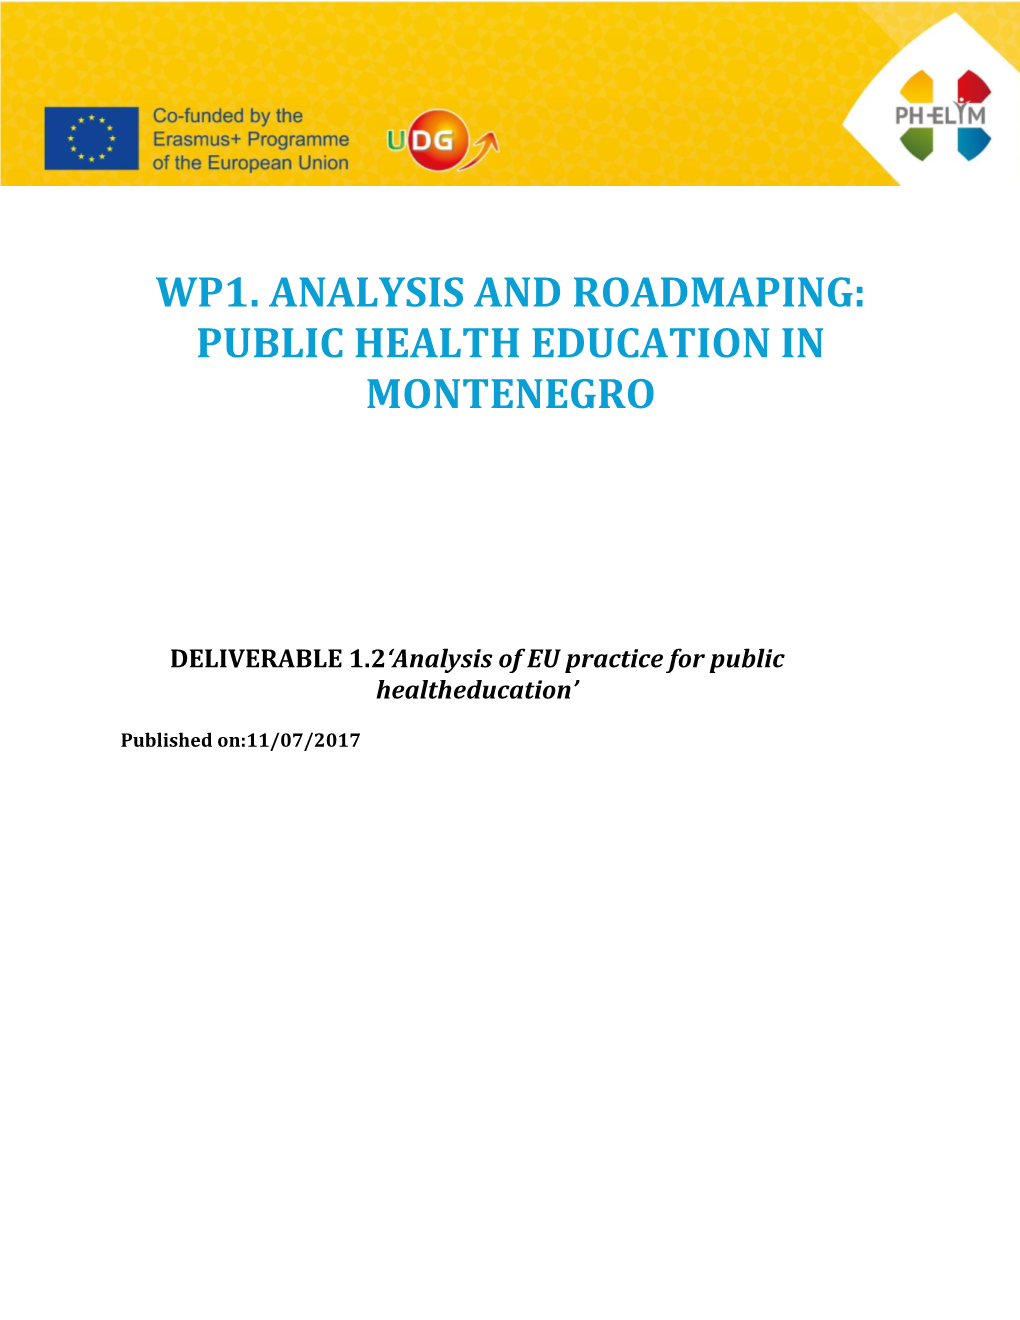 Public Health Education in Montenegro